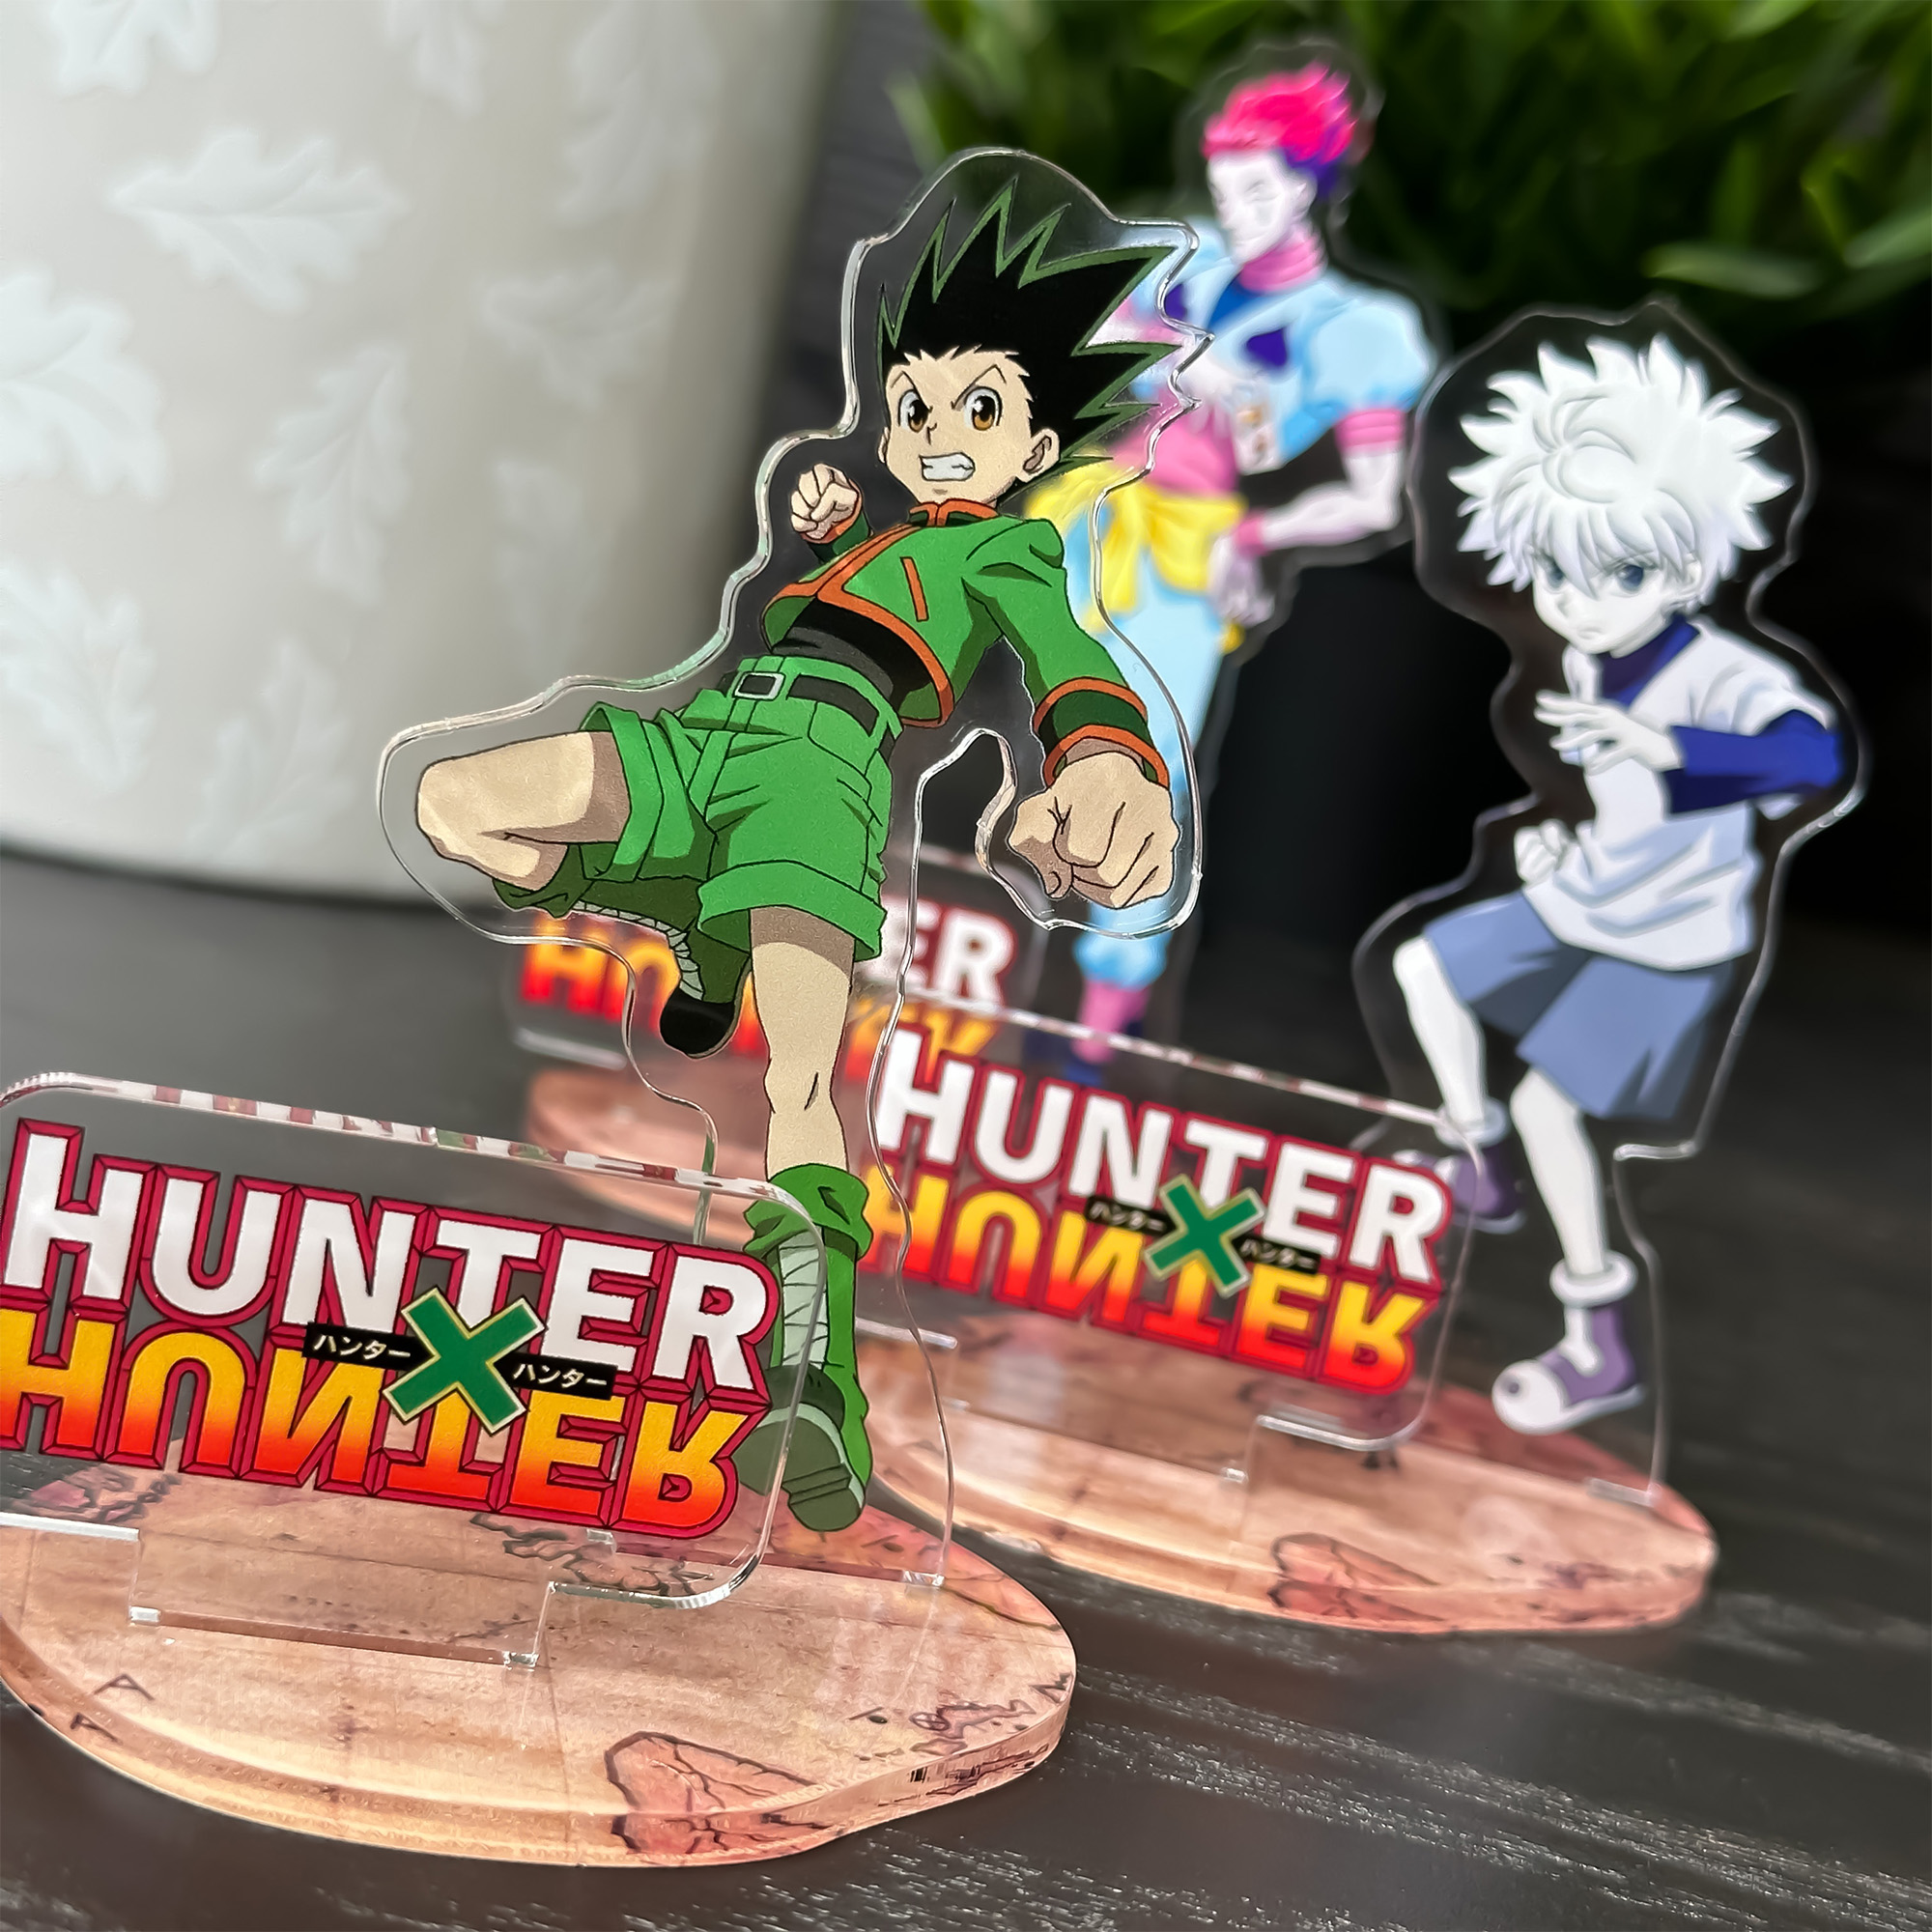 Hisoka Acryl Figur - Hunter x Hunter